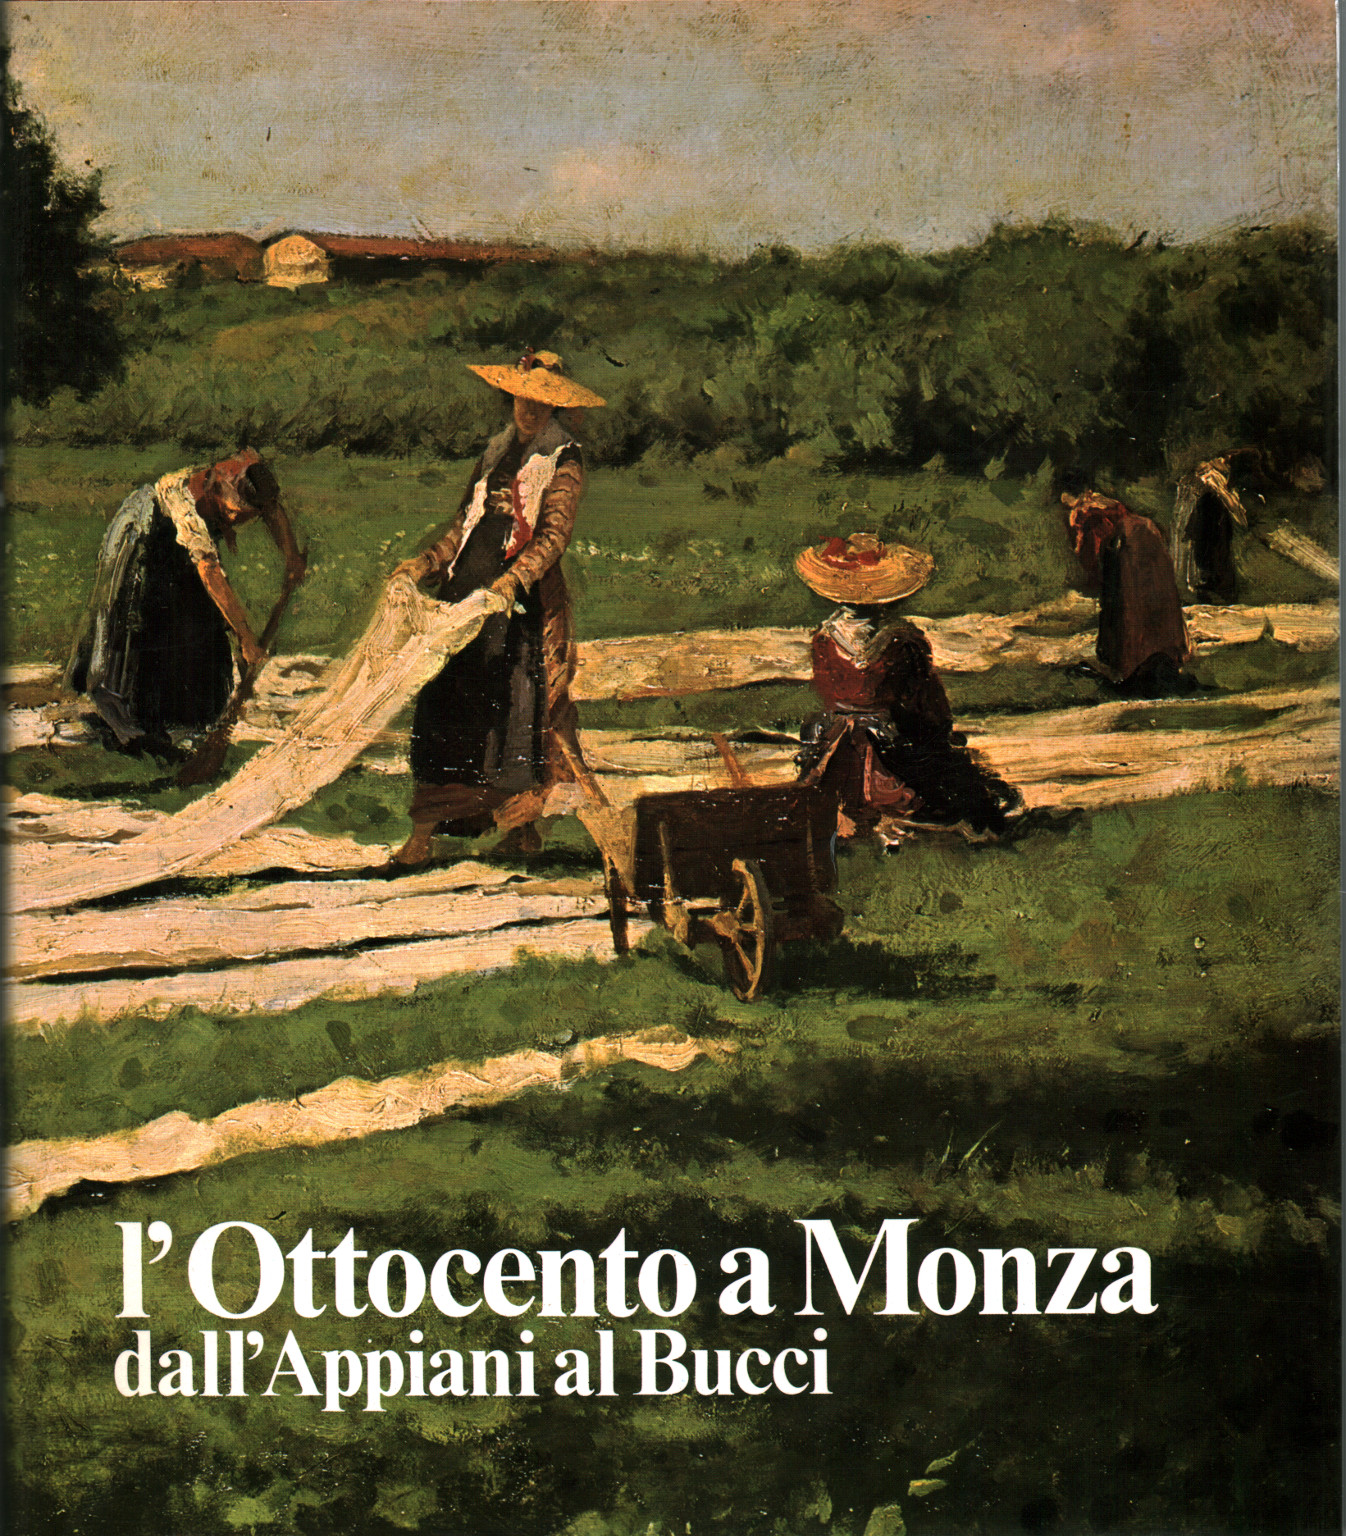 The nineteenth century in Monza by Appiani al Bucci, s.a.